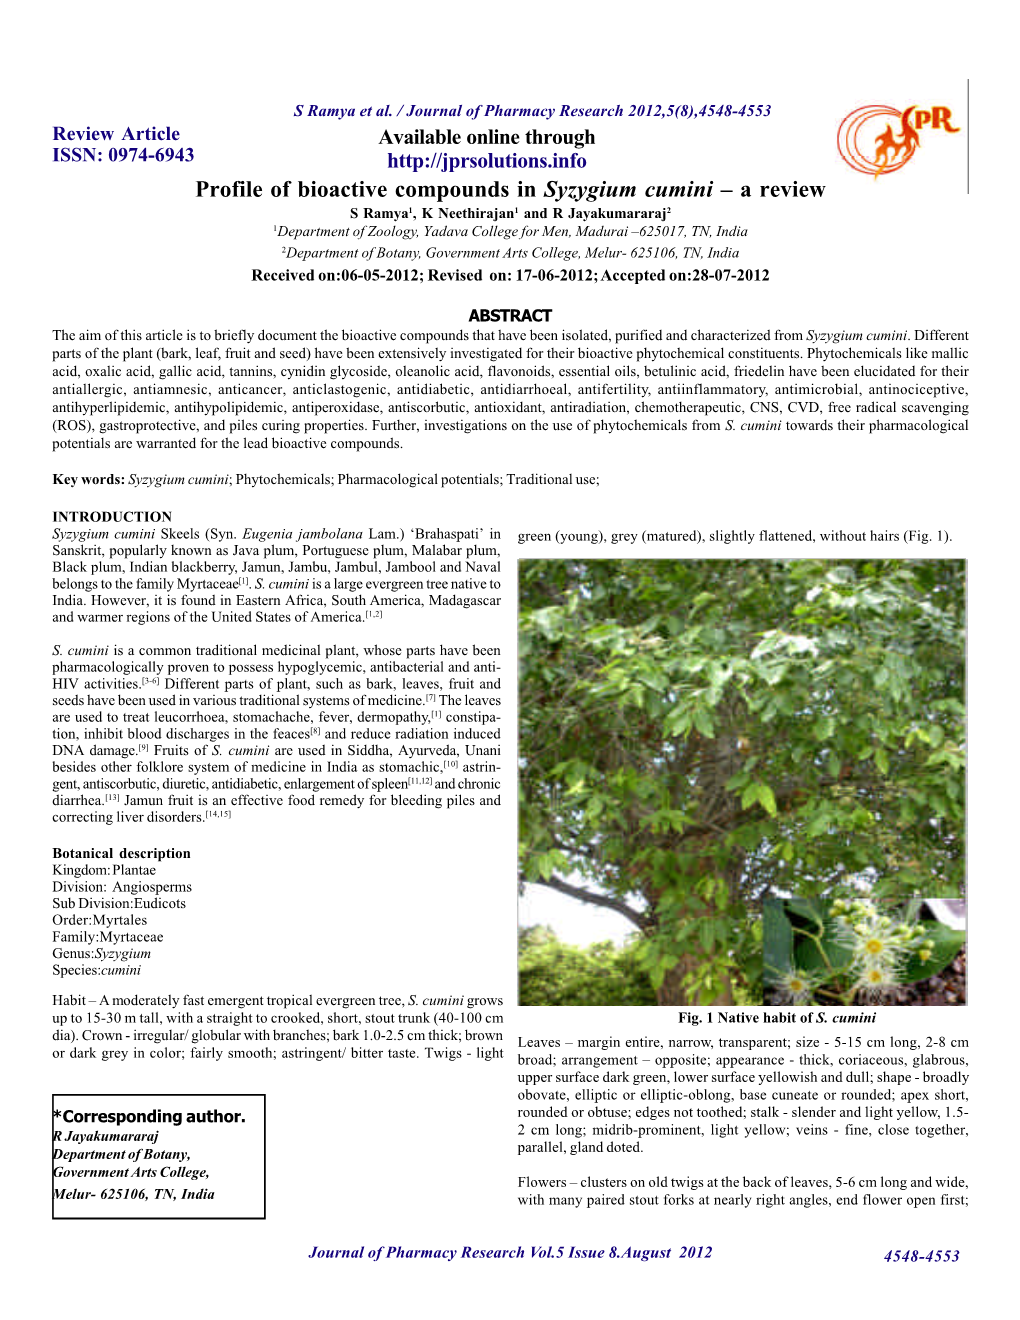 Profile of Bioactive Compounds in Syzygium Cumini